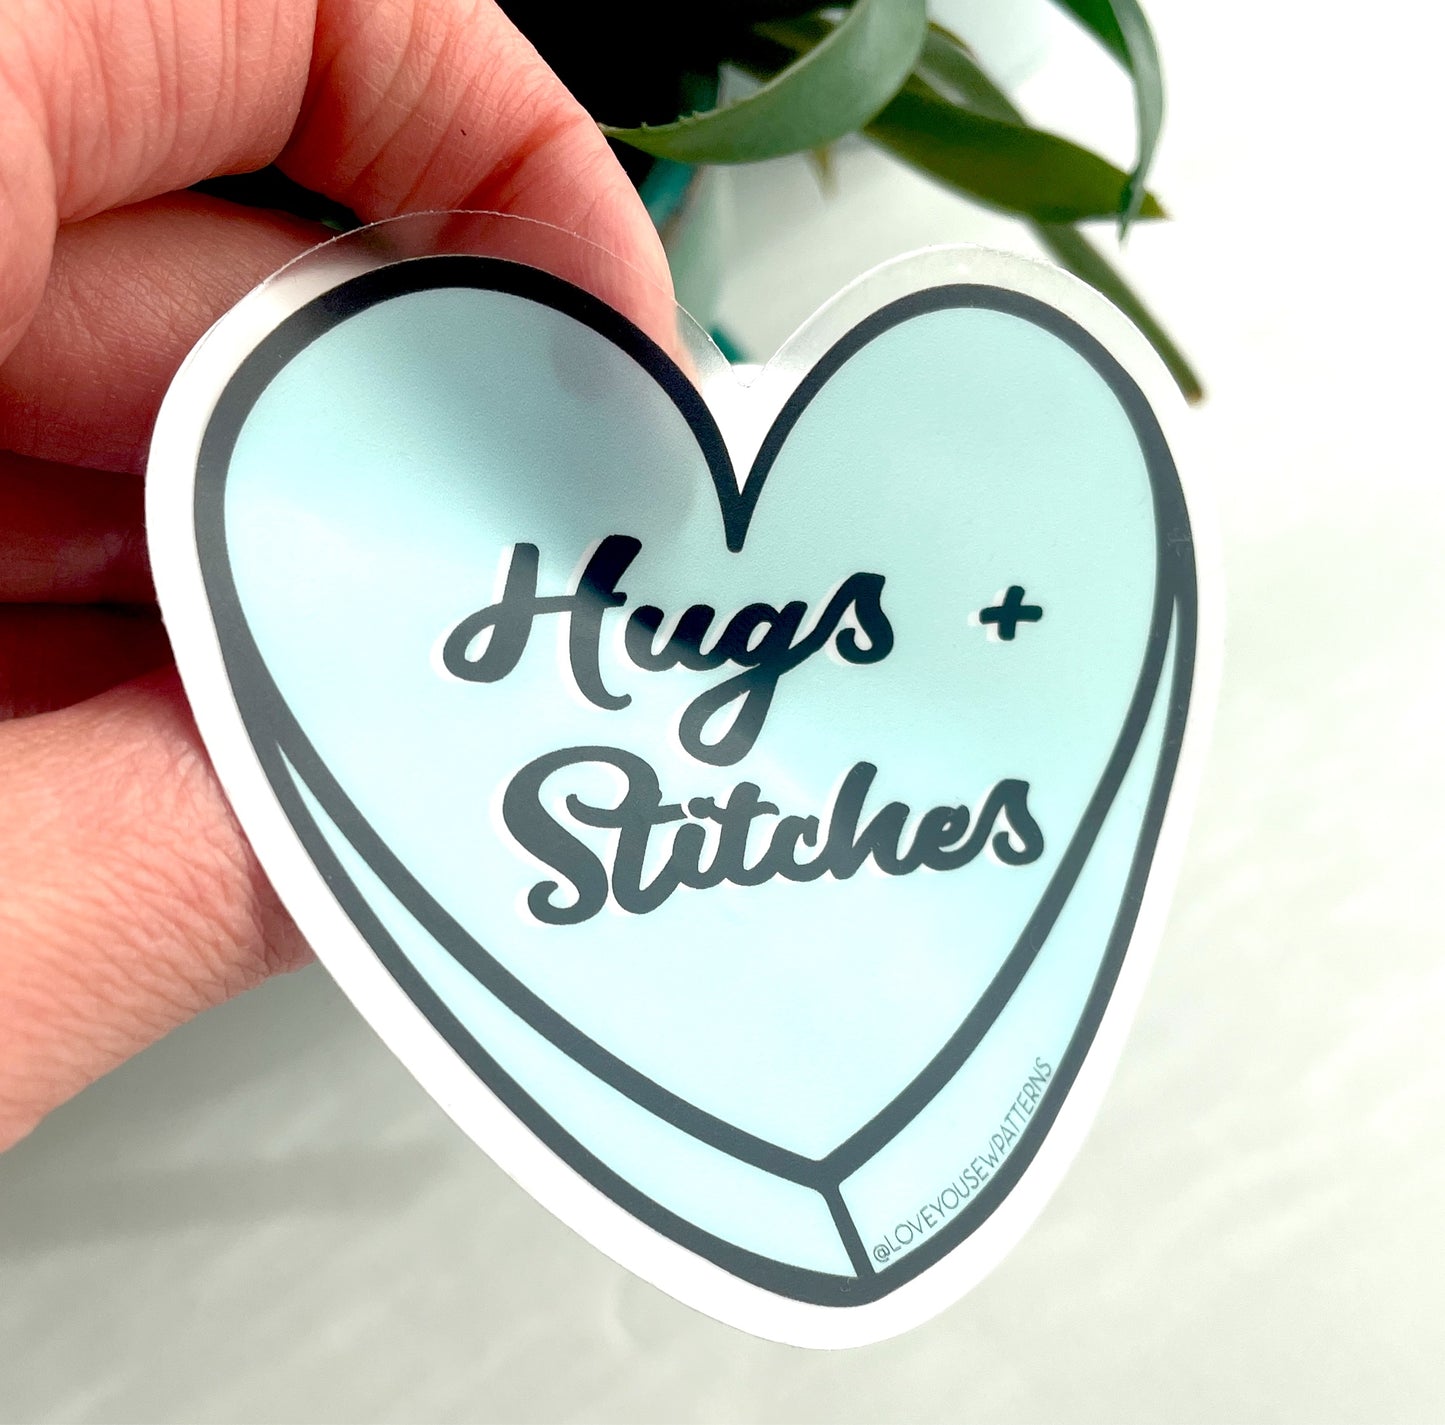 “Hugs + Stitches” Sticker